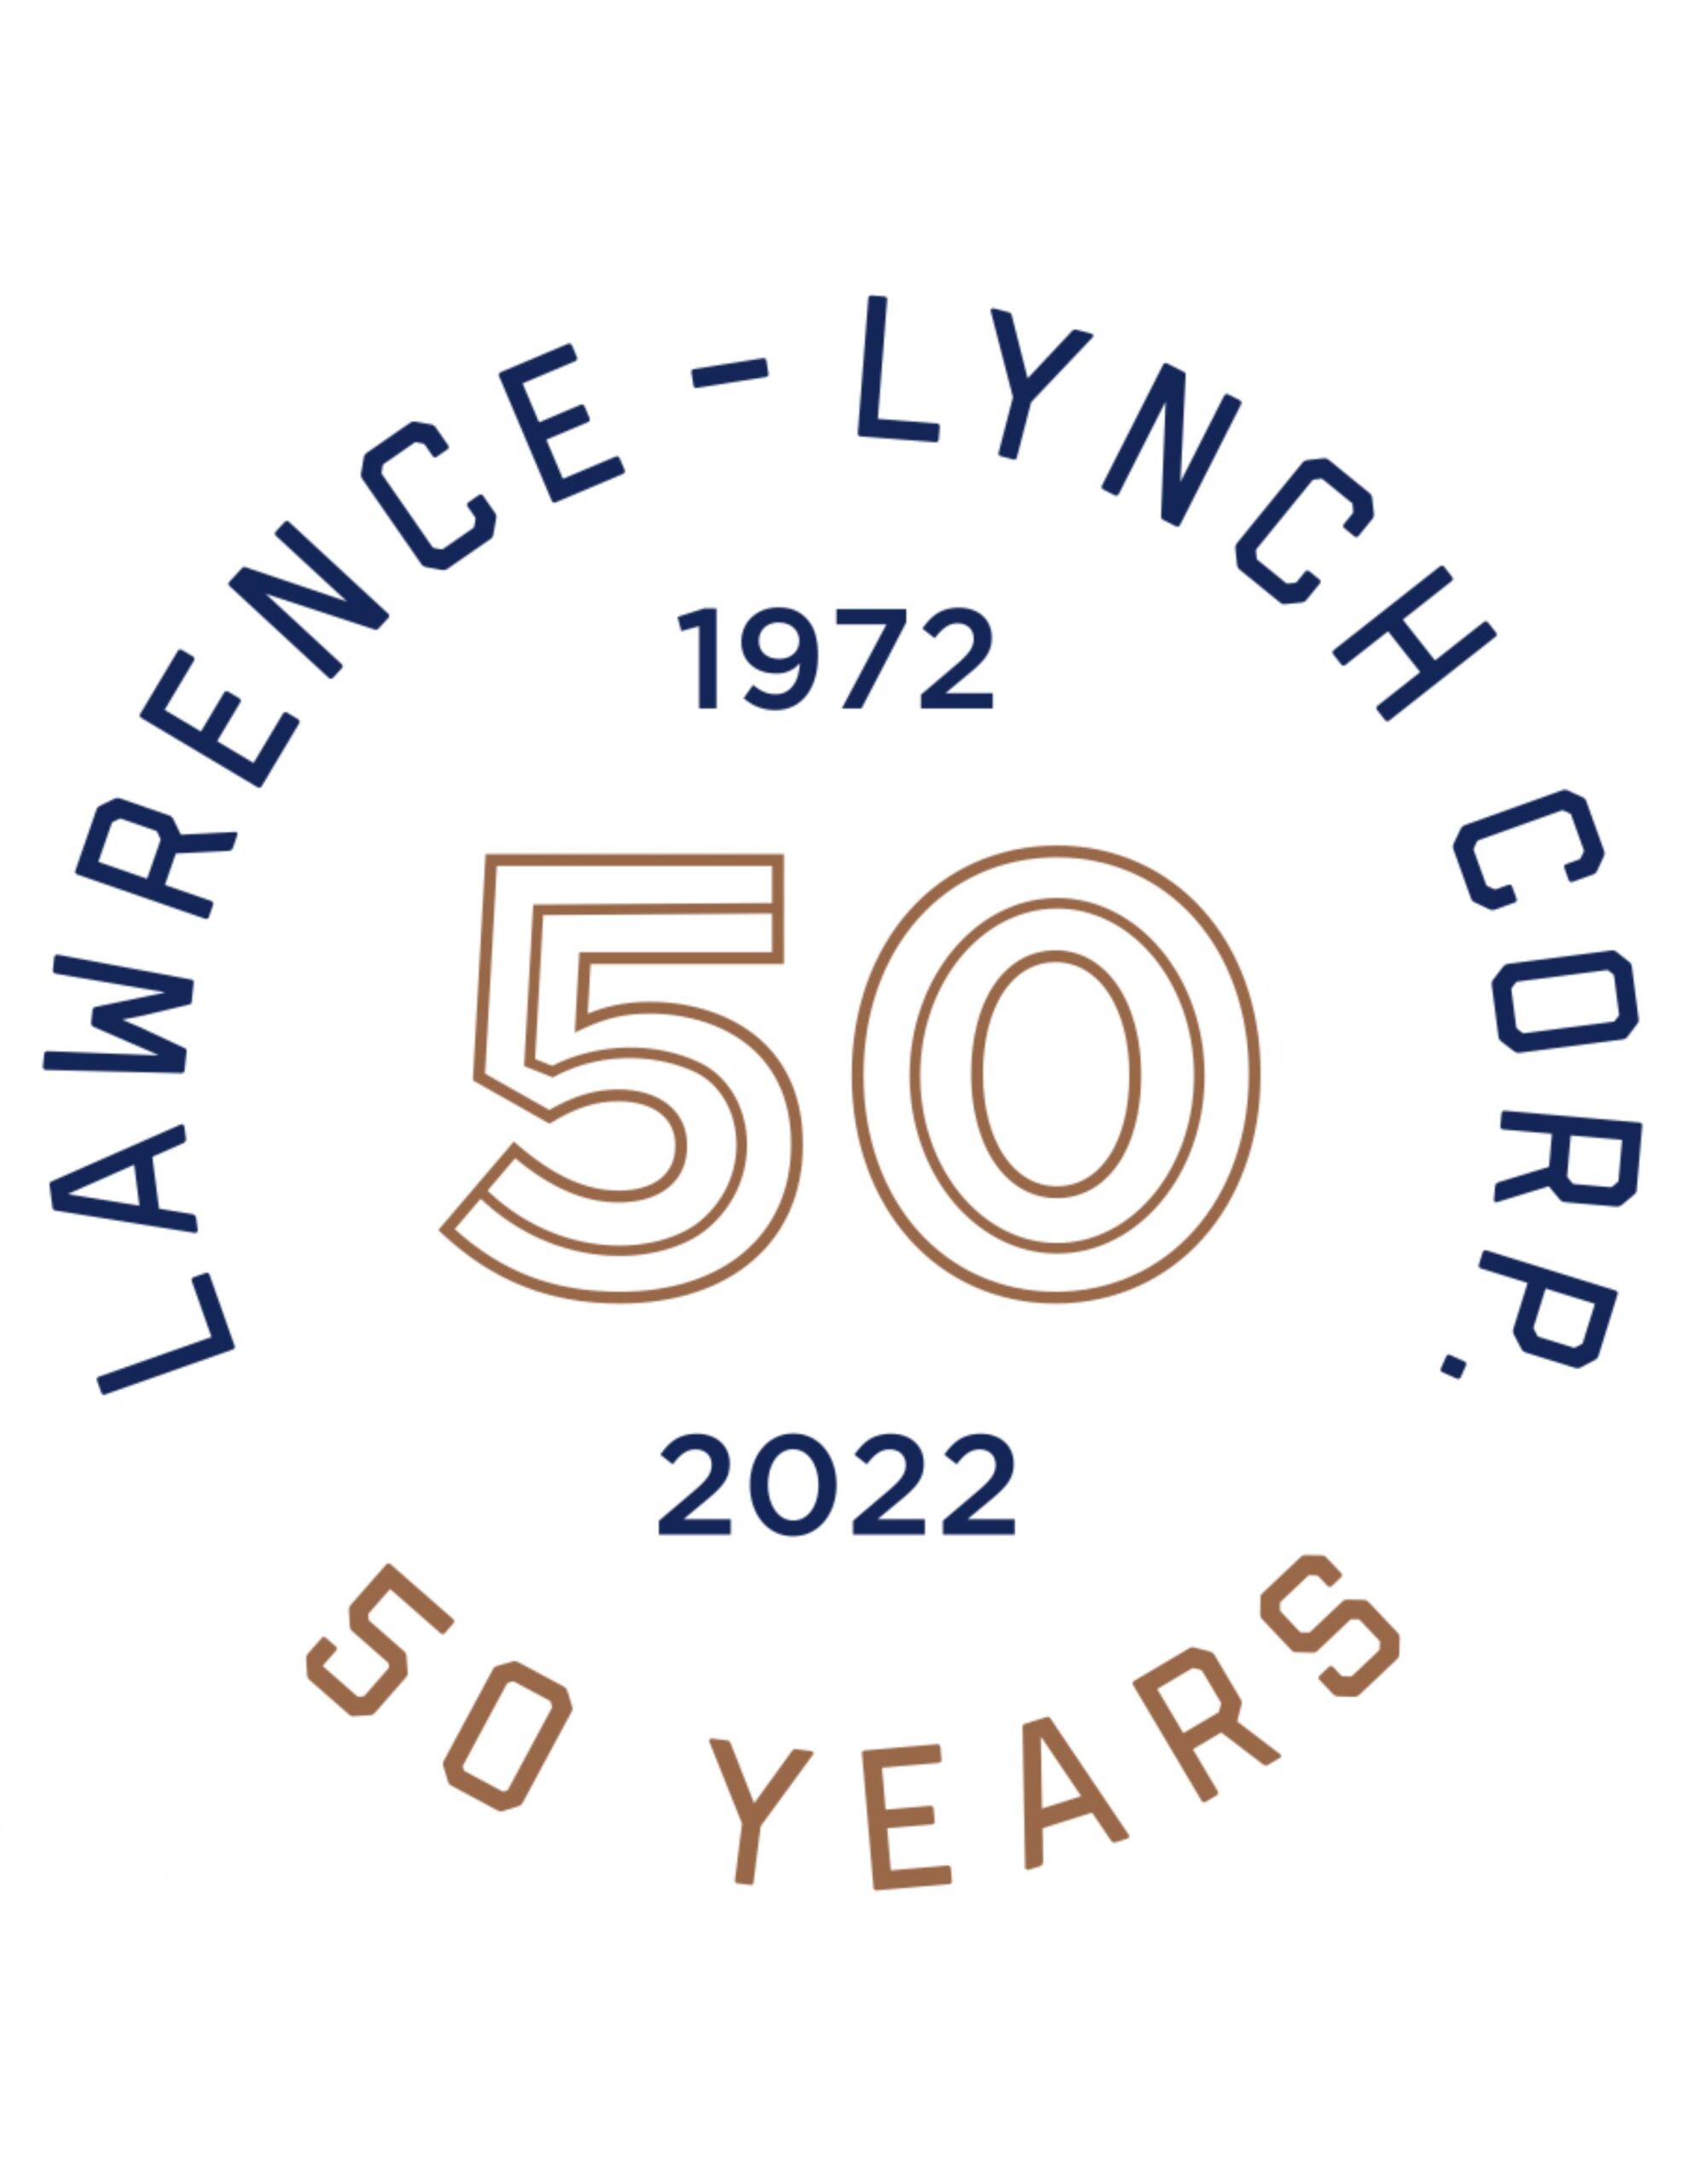 Lawrence Lynch Company